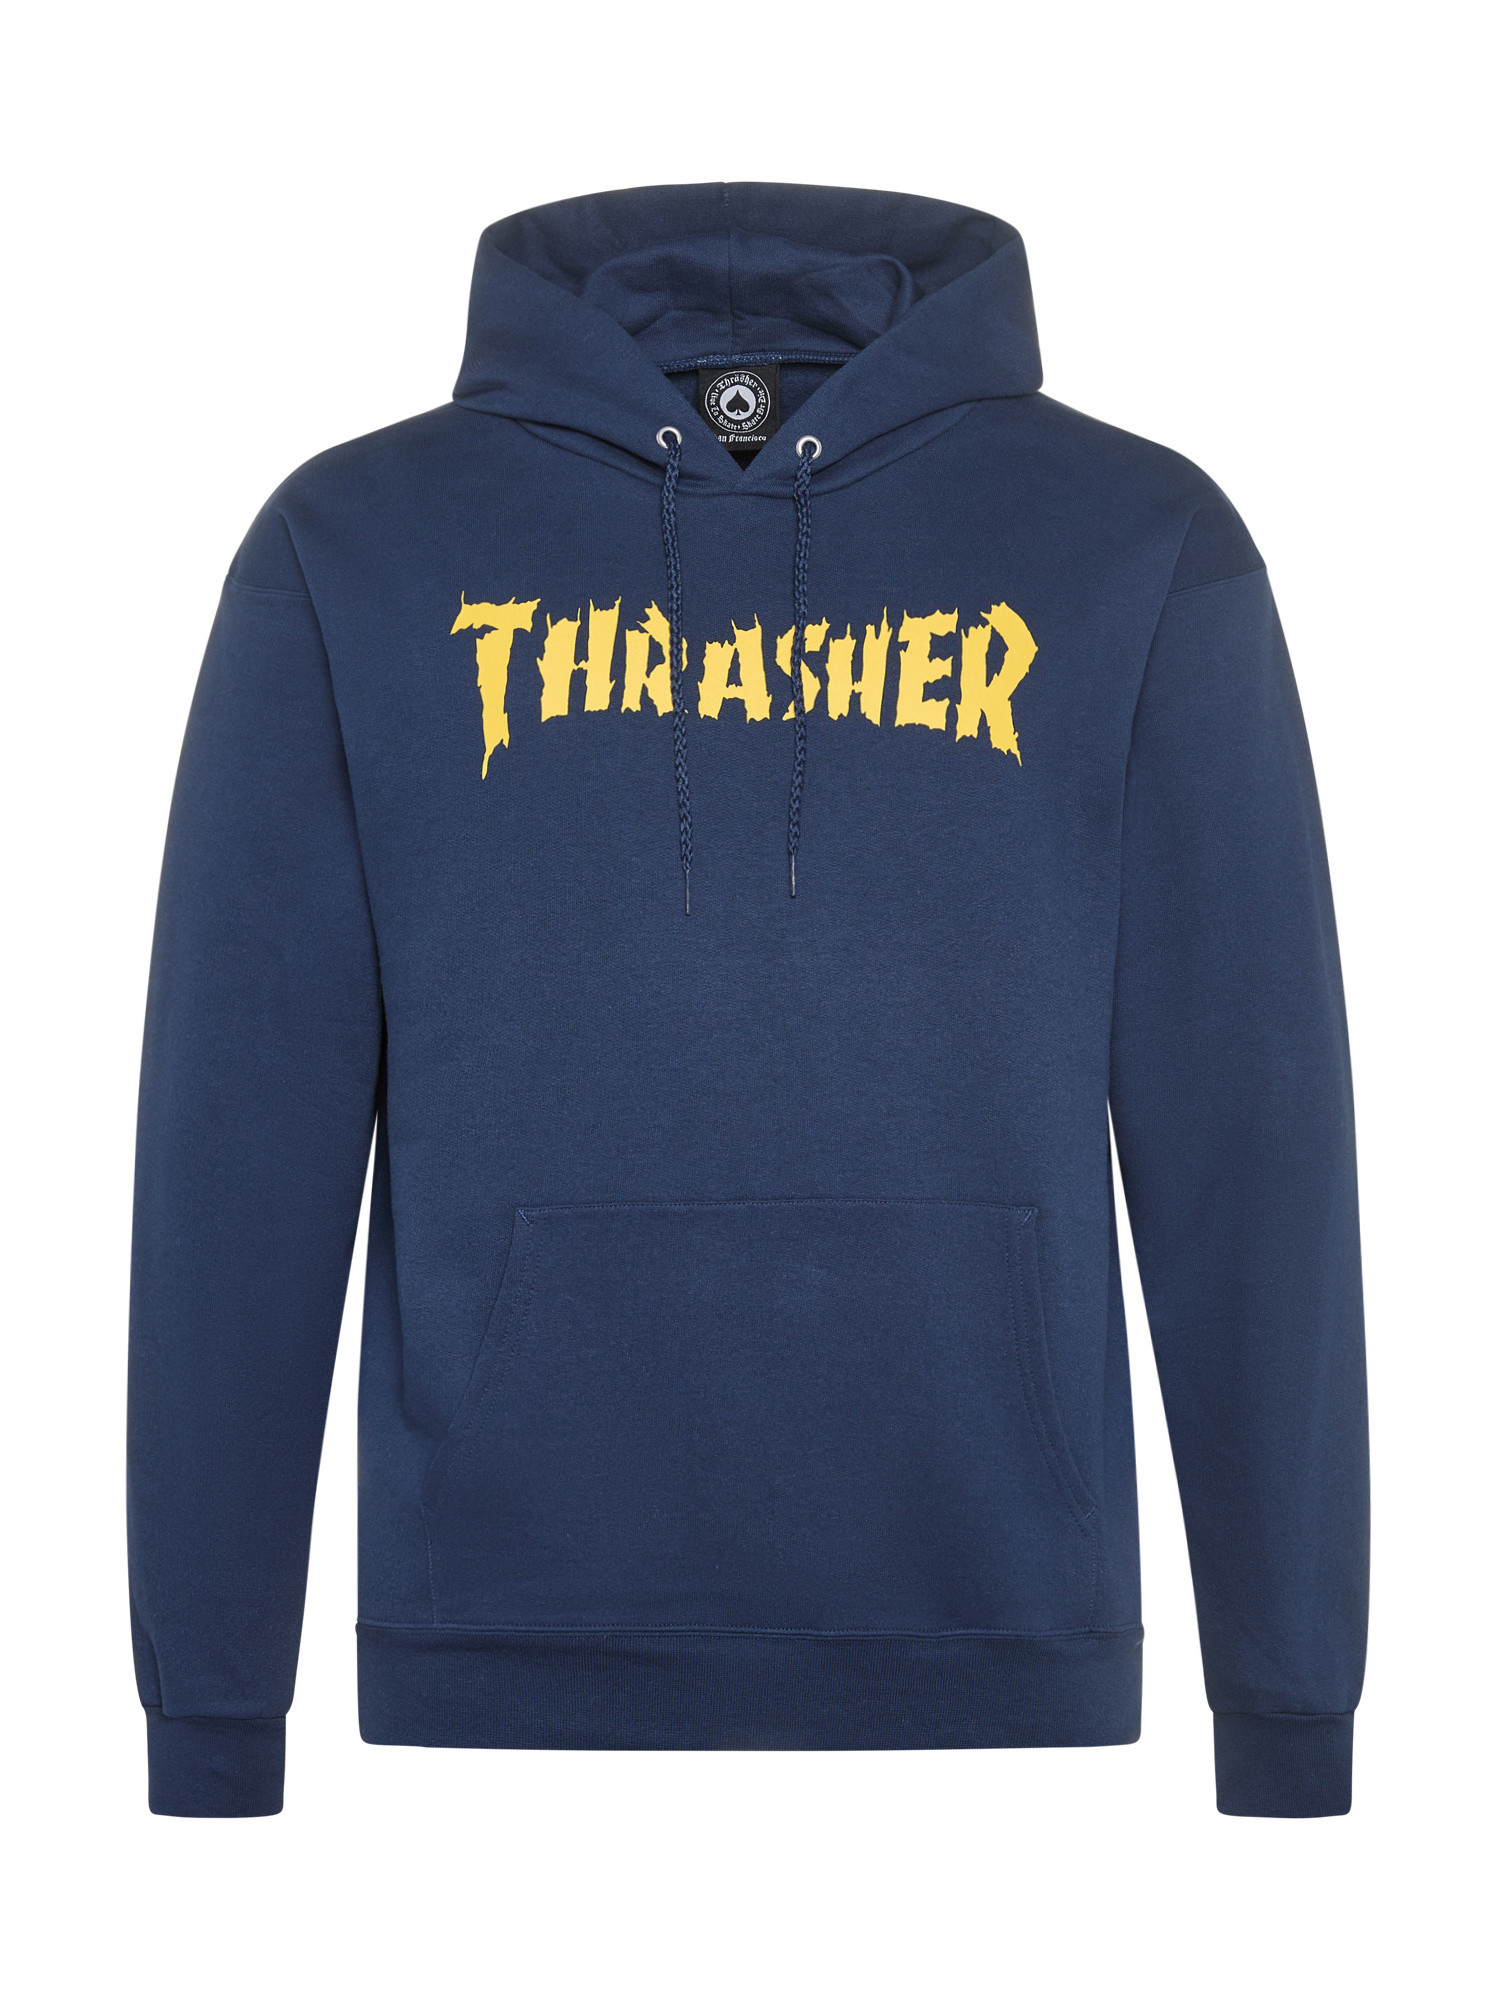 Thrasher - Burn it down print hoodie, Blue, large image number 0